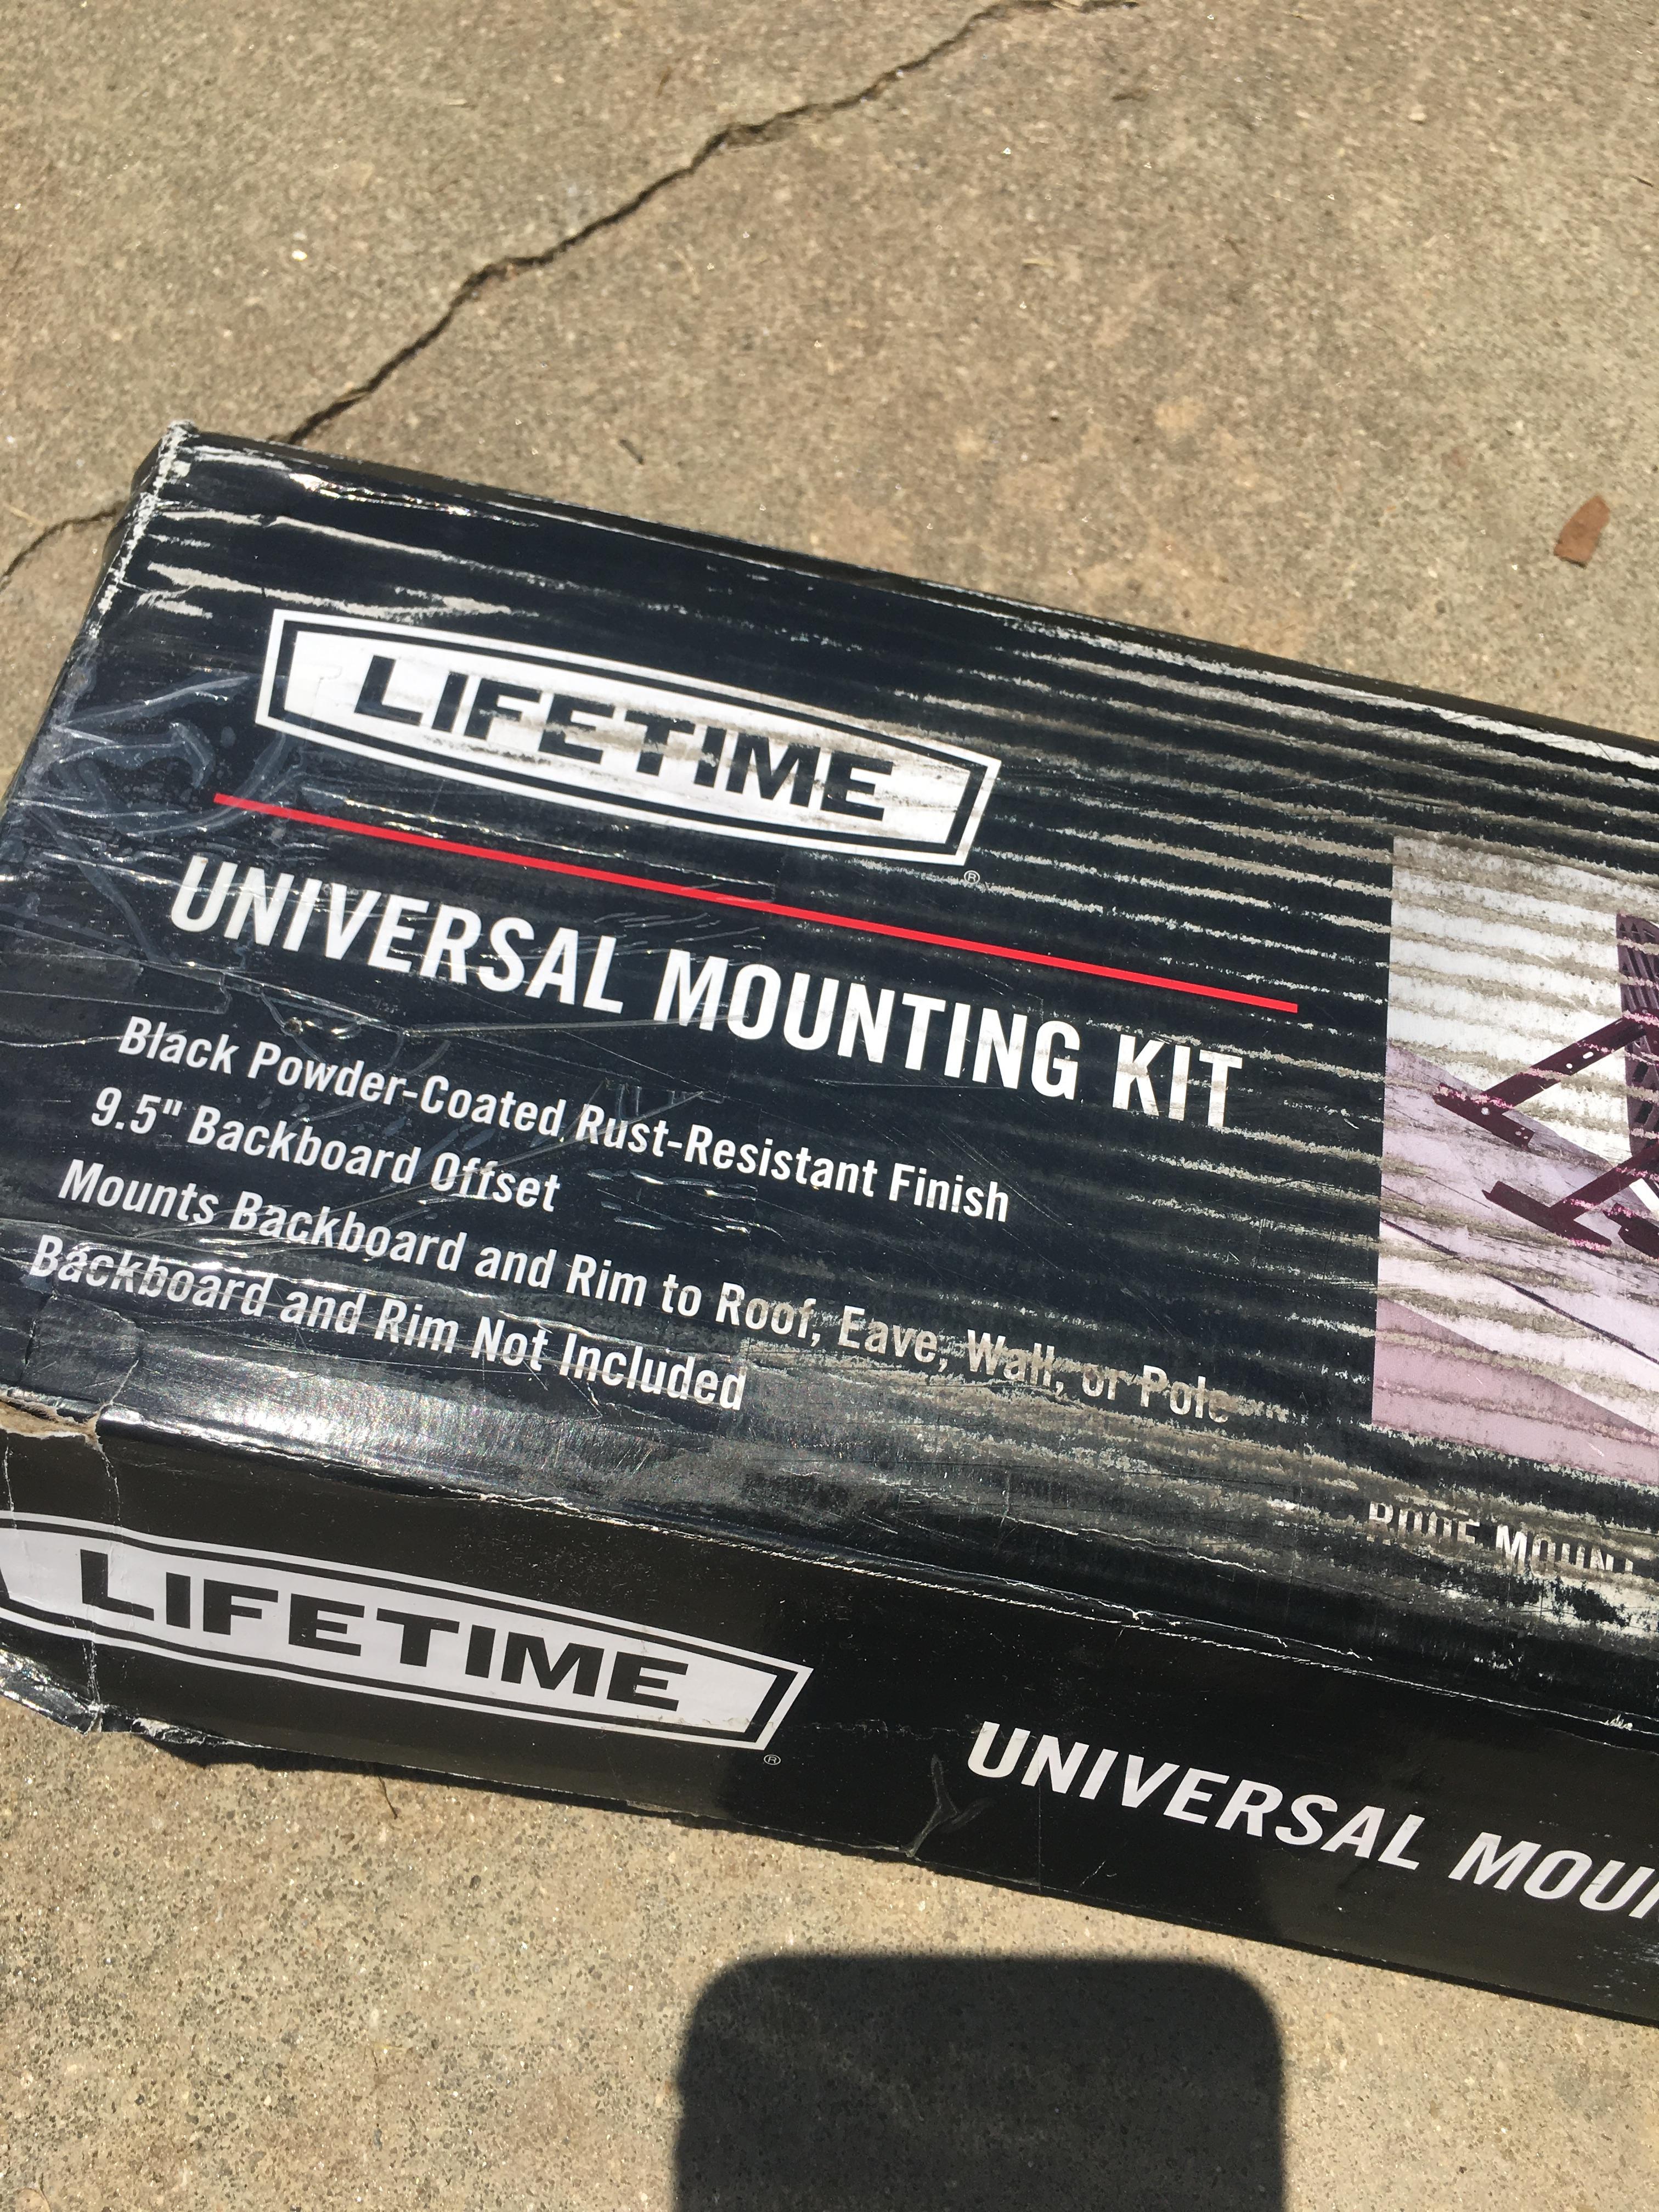 LifeTime Model #9594 Universal Mounting Kit